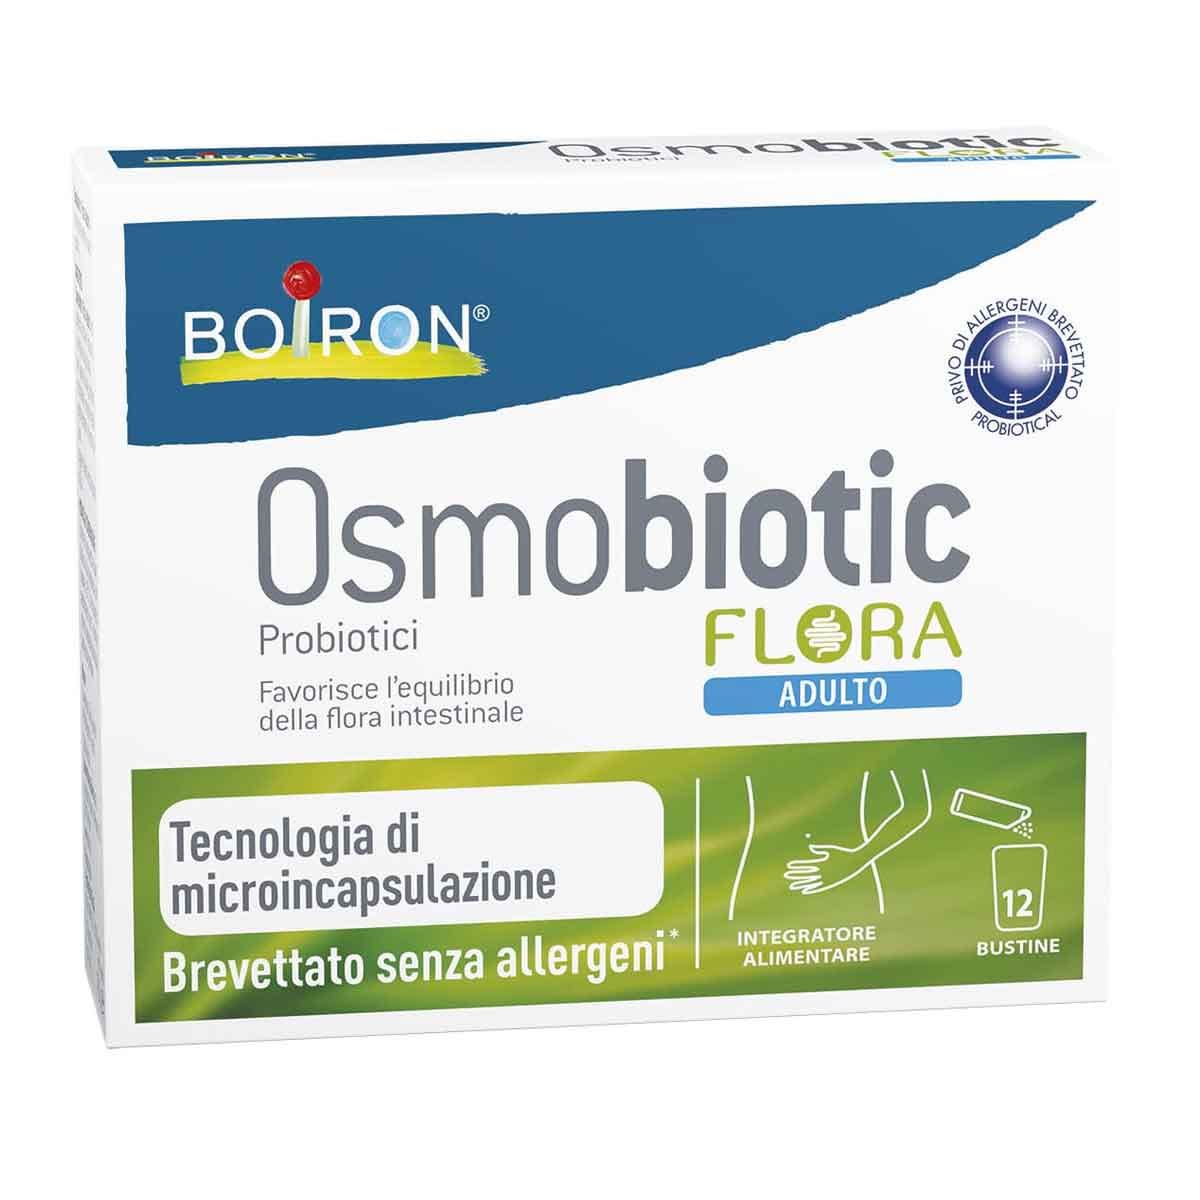 980251971 - Boiron Osmobiotic Flora Adulto Integratore Flora Intestinale 12 bustine - 4706069_2.jpg